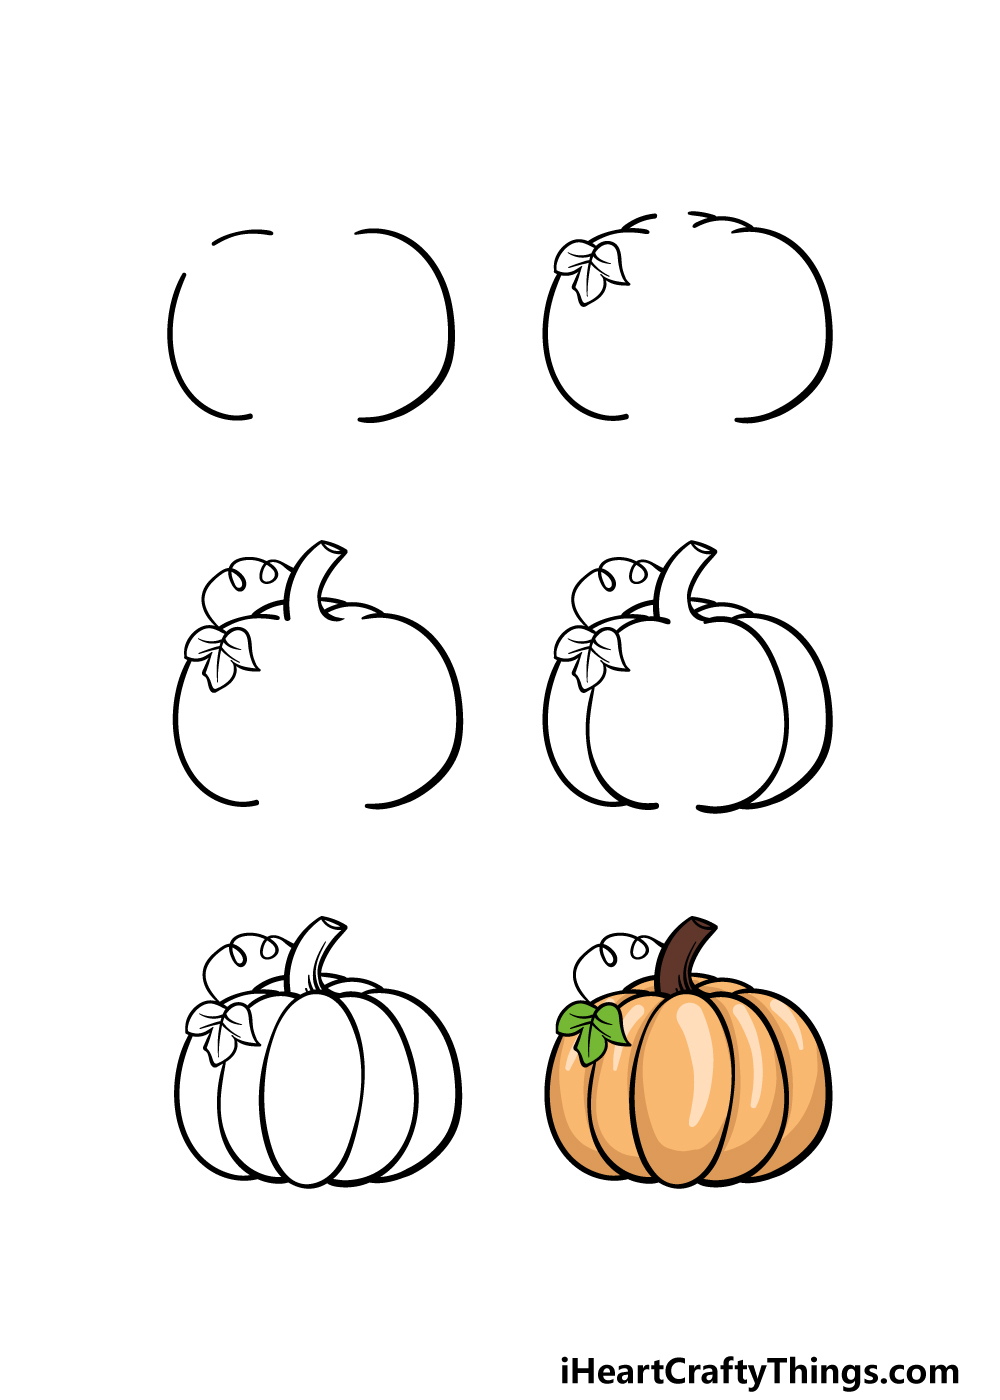 Cartoon Pumpkin Drawing - How To Draw A Cartoon Pumpkin Step By Step